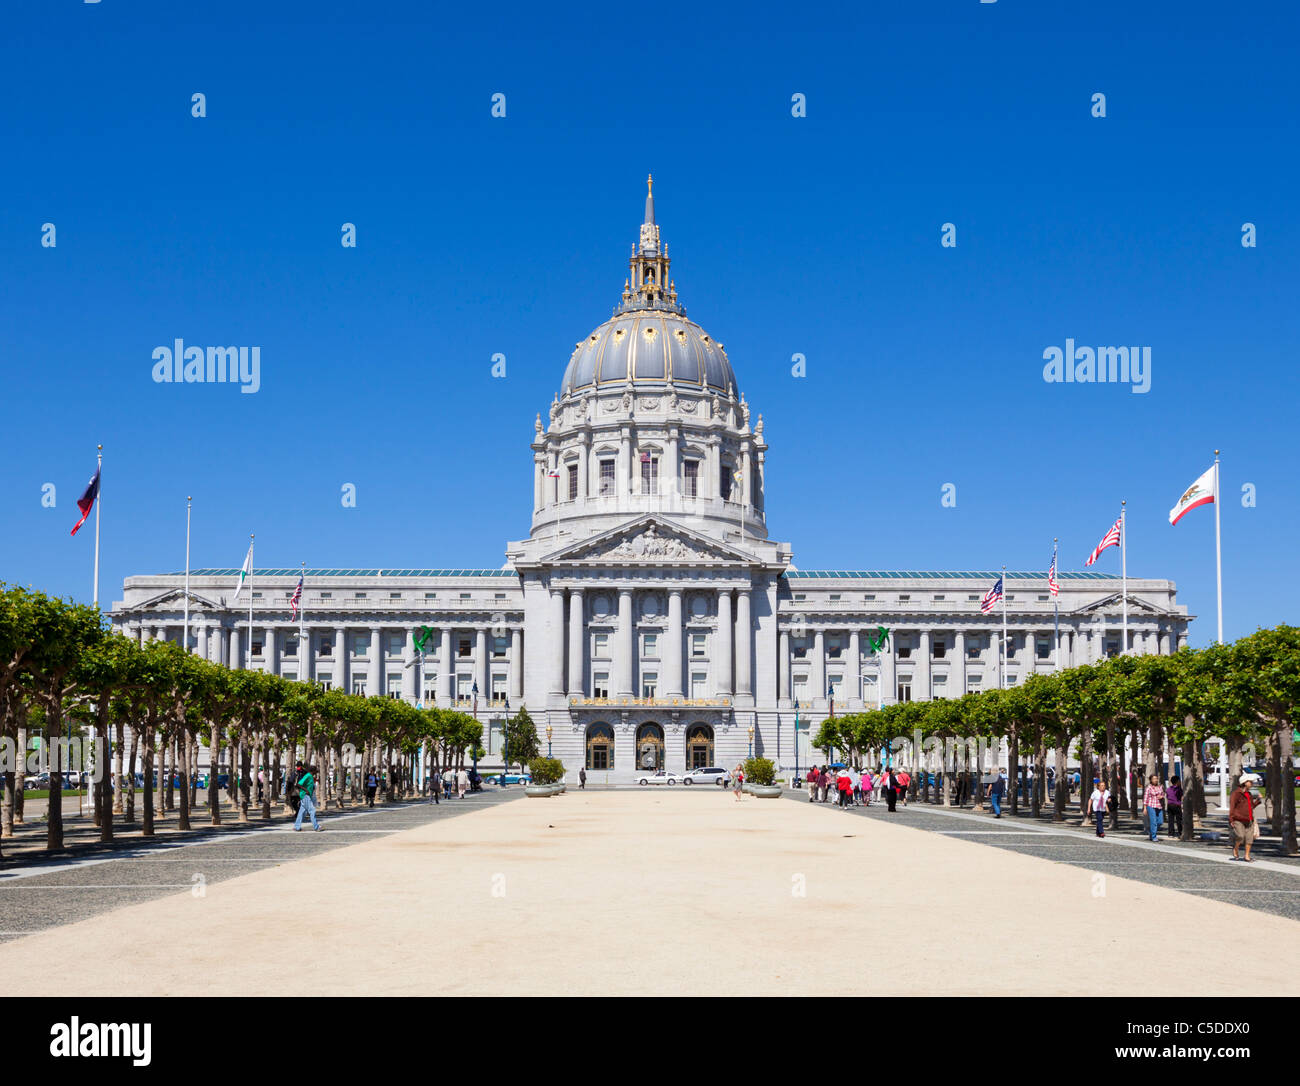 san francisco city hall or civic centre center California USA United States of America Stock Photo